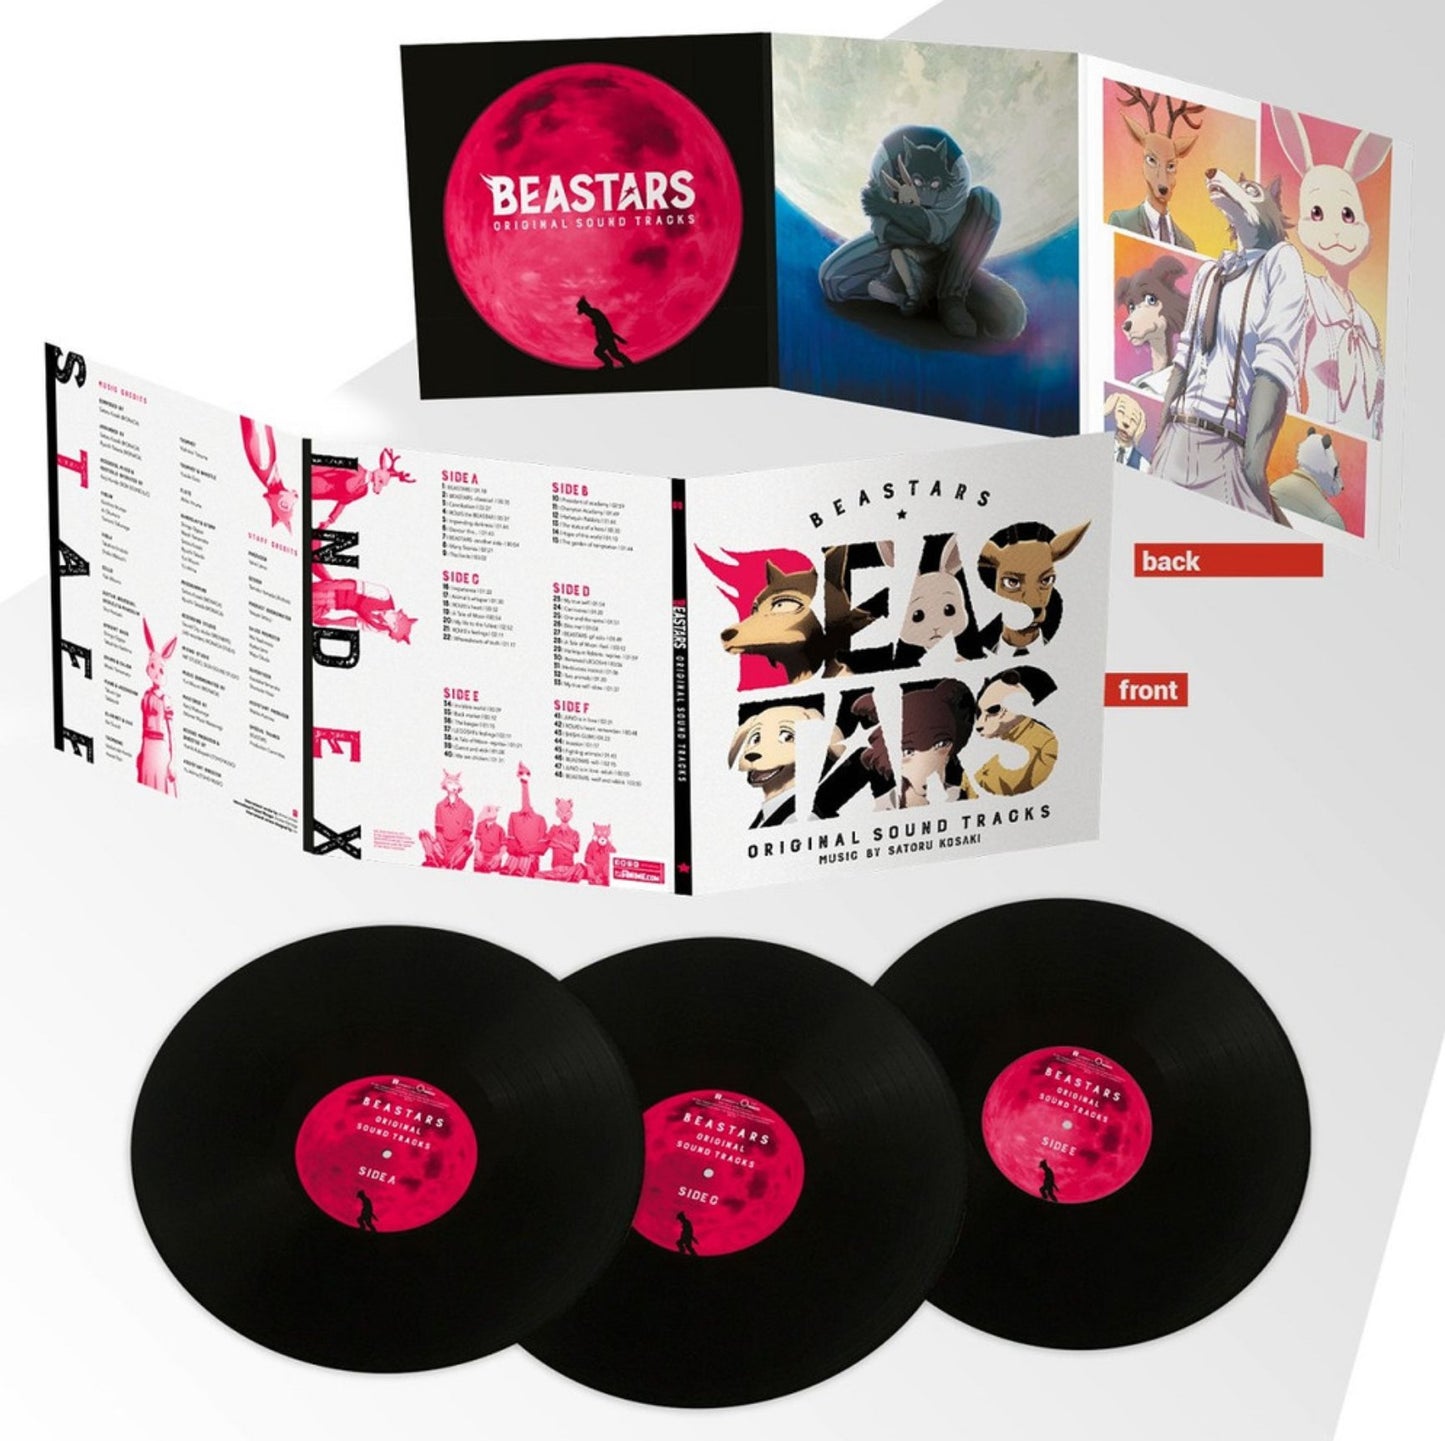 Beastars Vinyl Record - All Contents